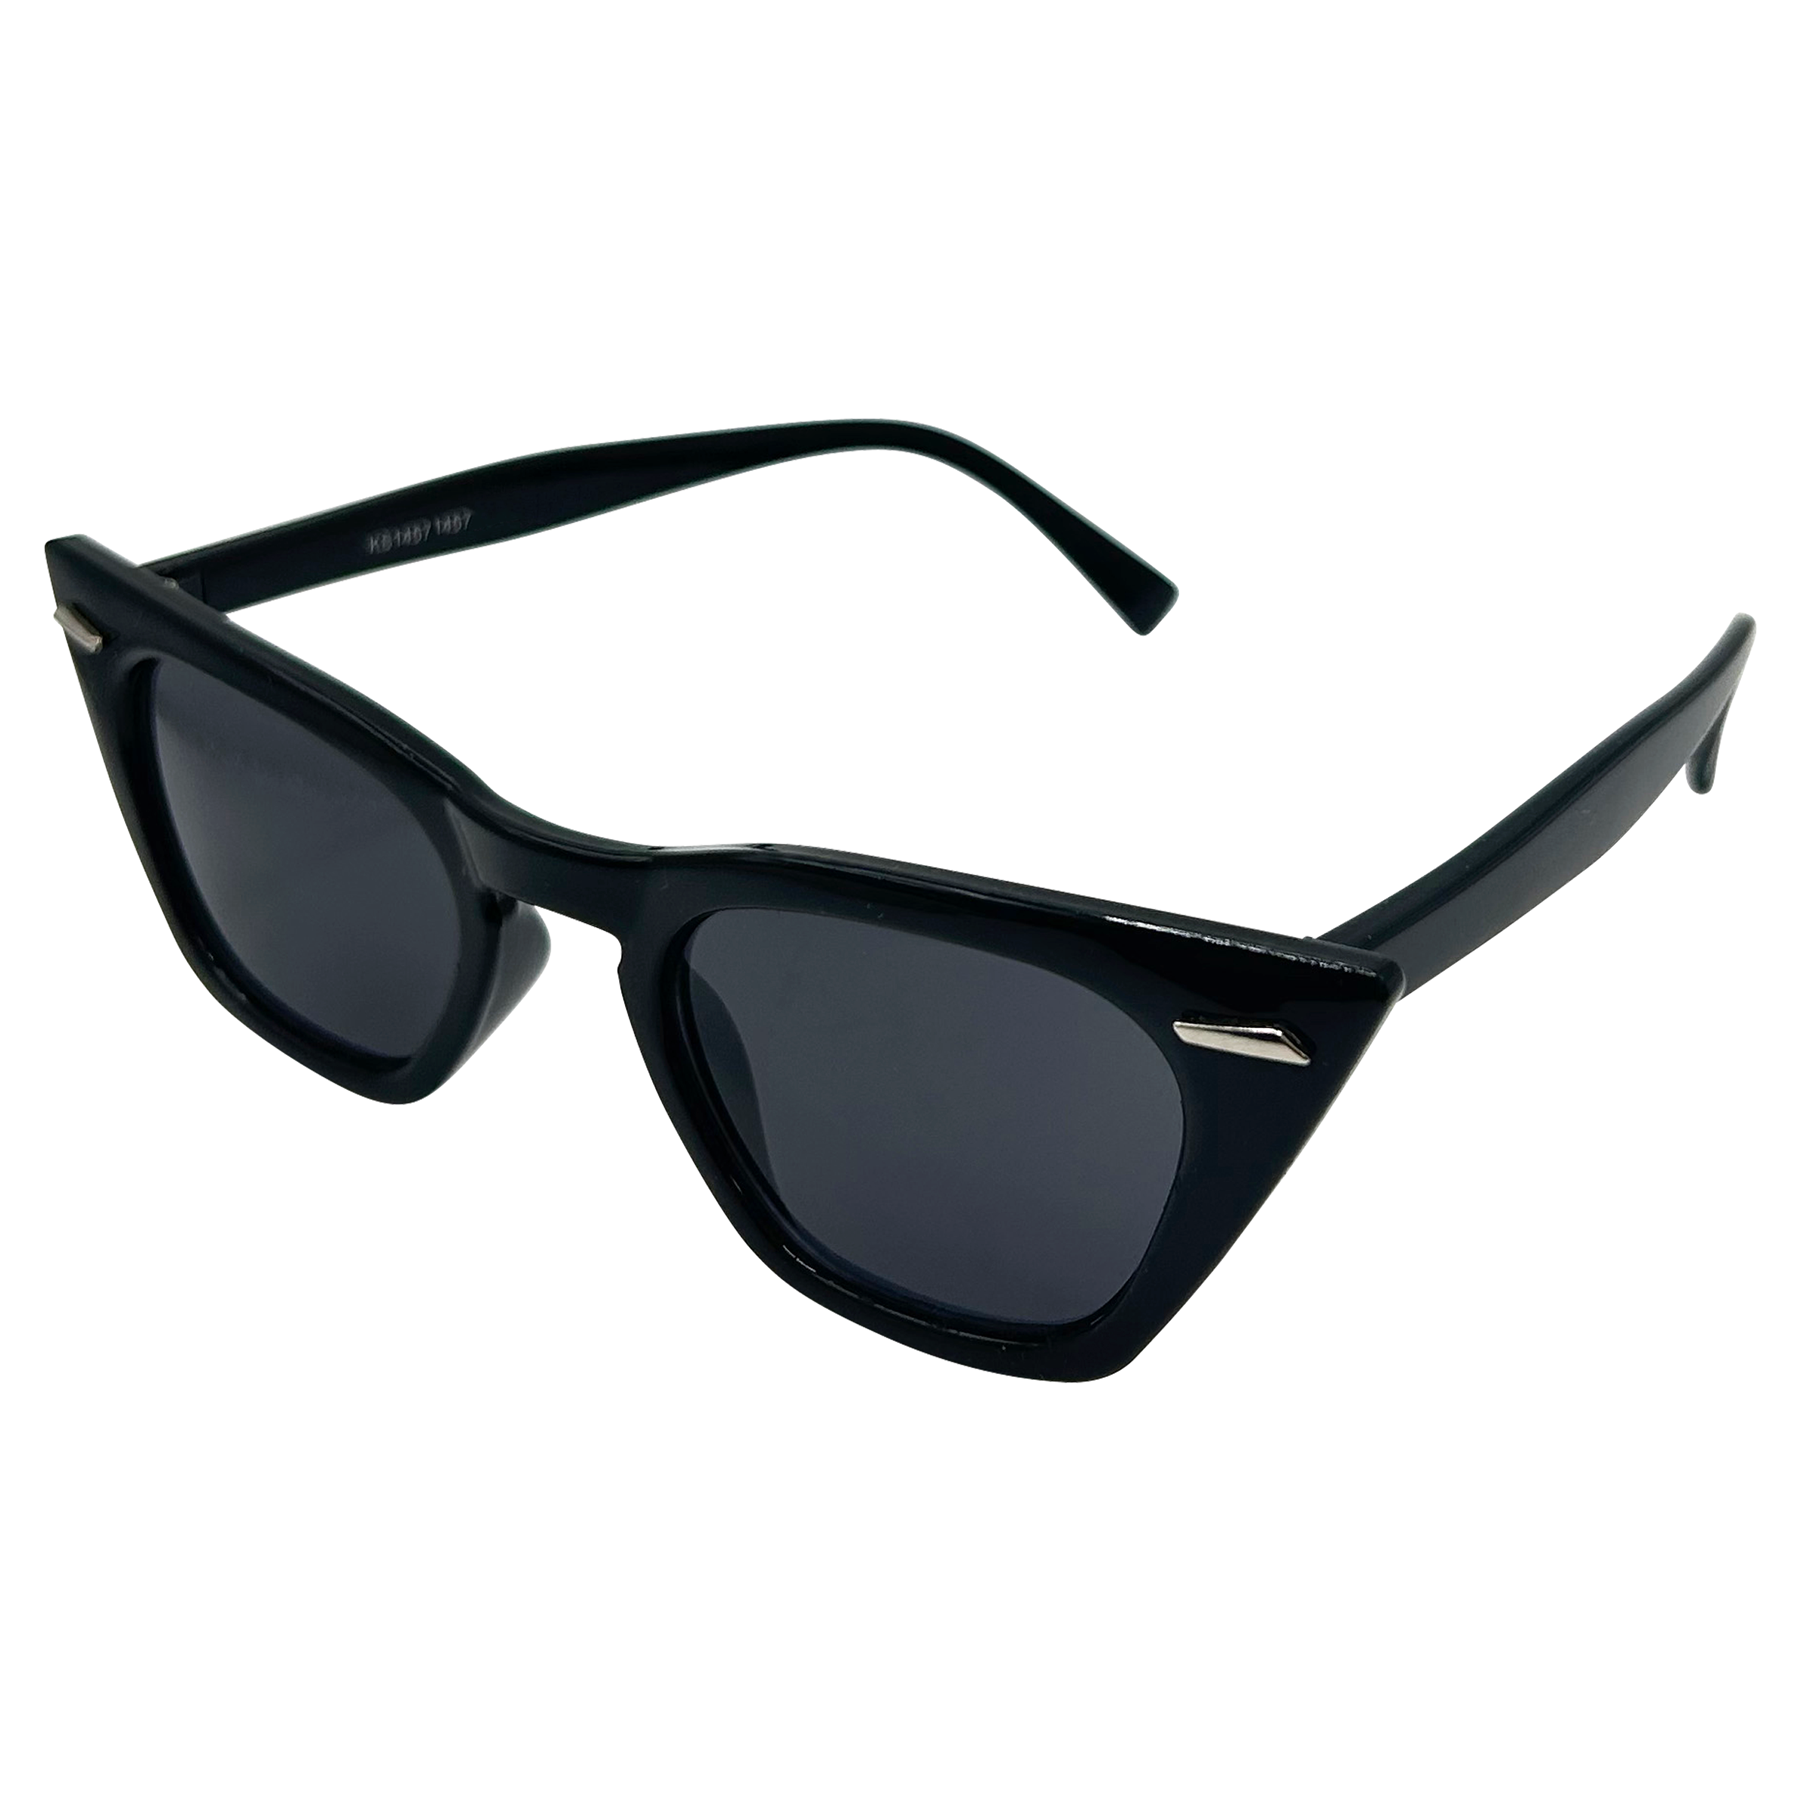 SACCHARINE Gloss Black Cat-Eye Sunglasses